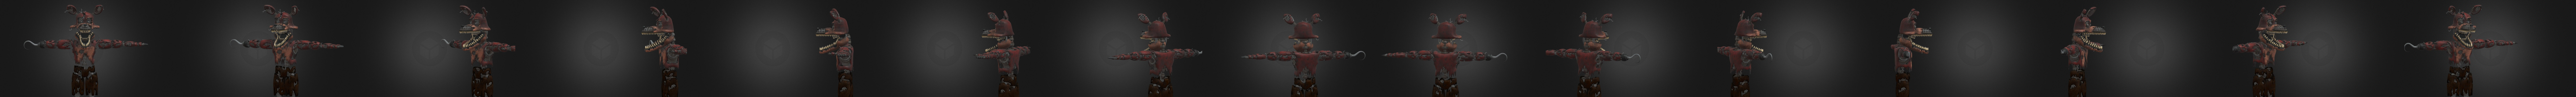 Foxy - Five Night's At Freddy's: Help Wanted - Download Free 3D model by  RandomFnafUserlol (@RandomUserlololol) [fc5e9c2]